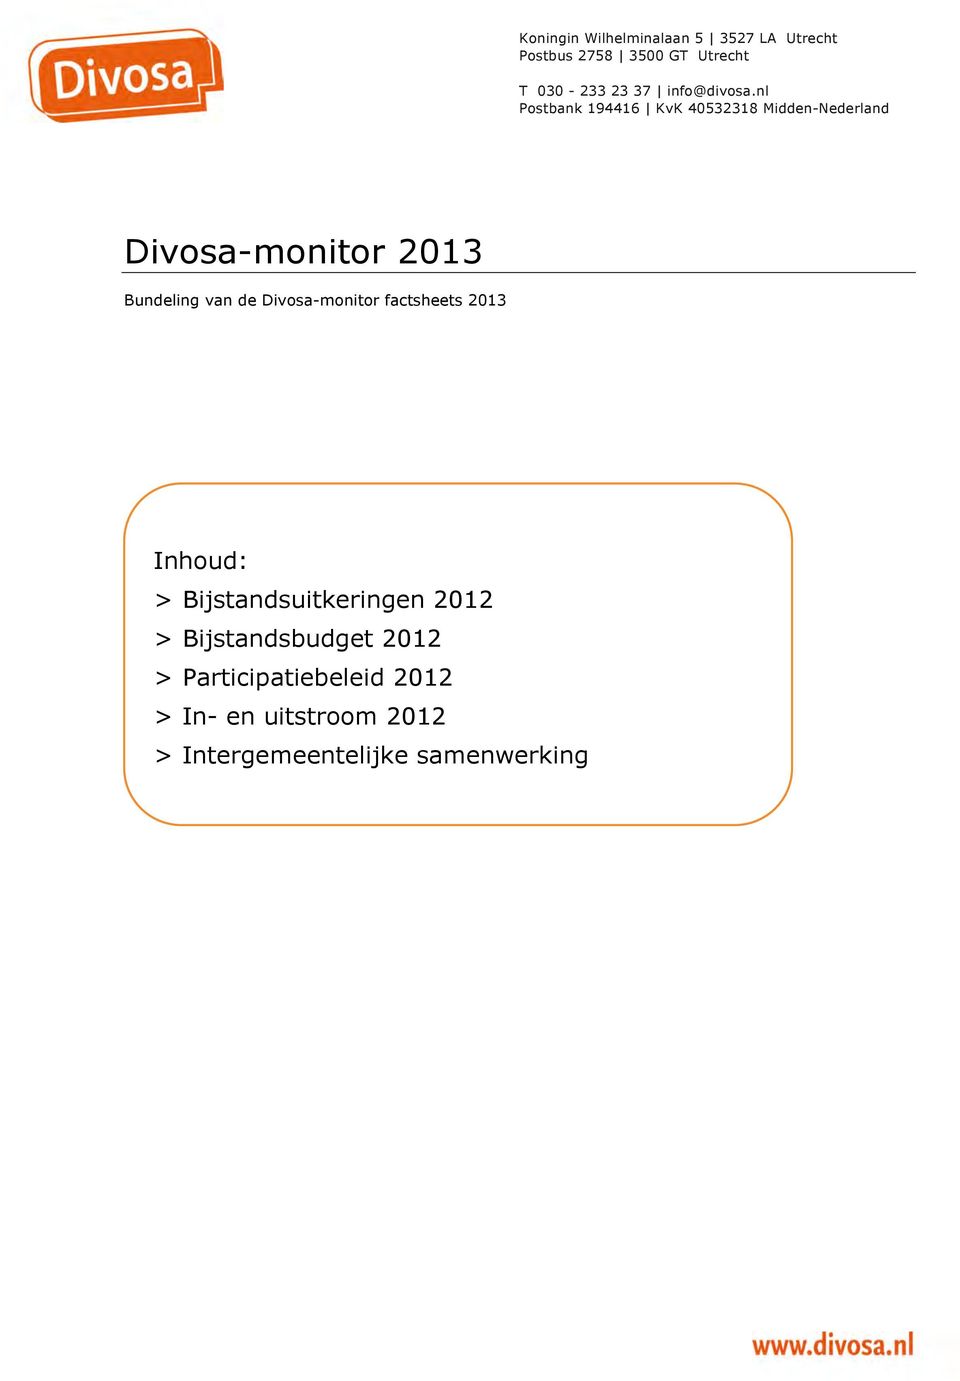 nl Postbank 194416 KvK 40532318 Midden-Nederland Divosa-monitor 2013 Bundeling van de